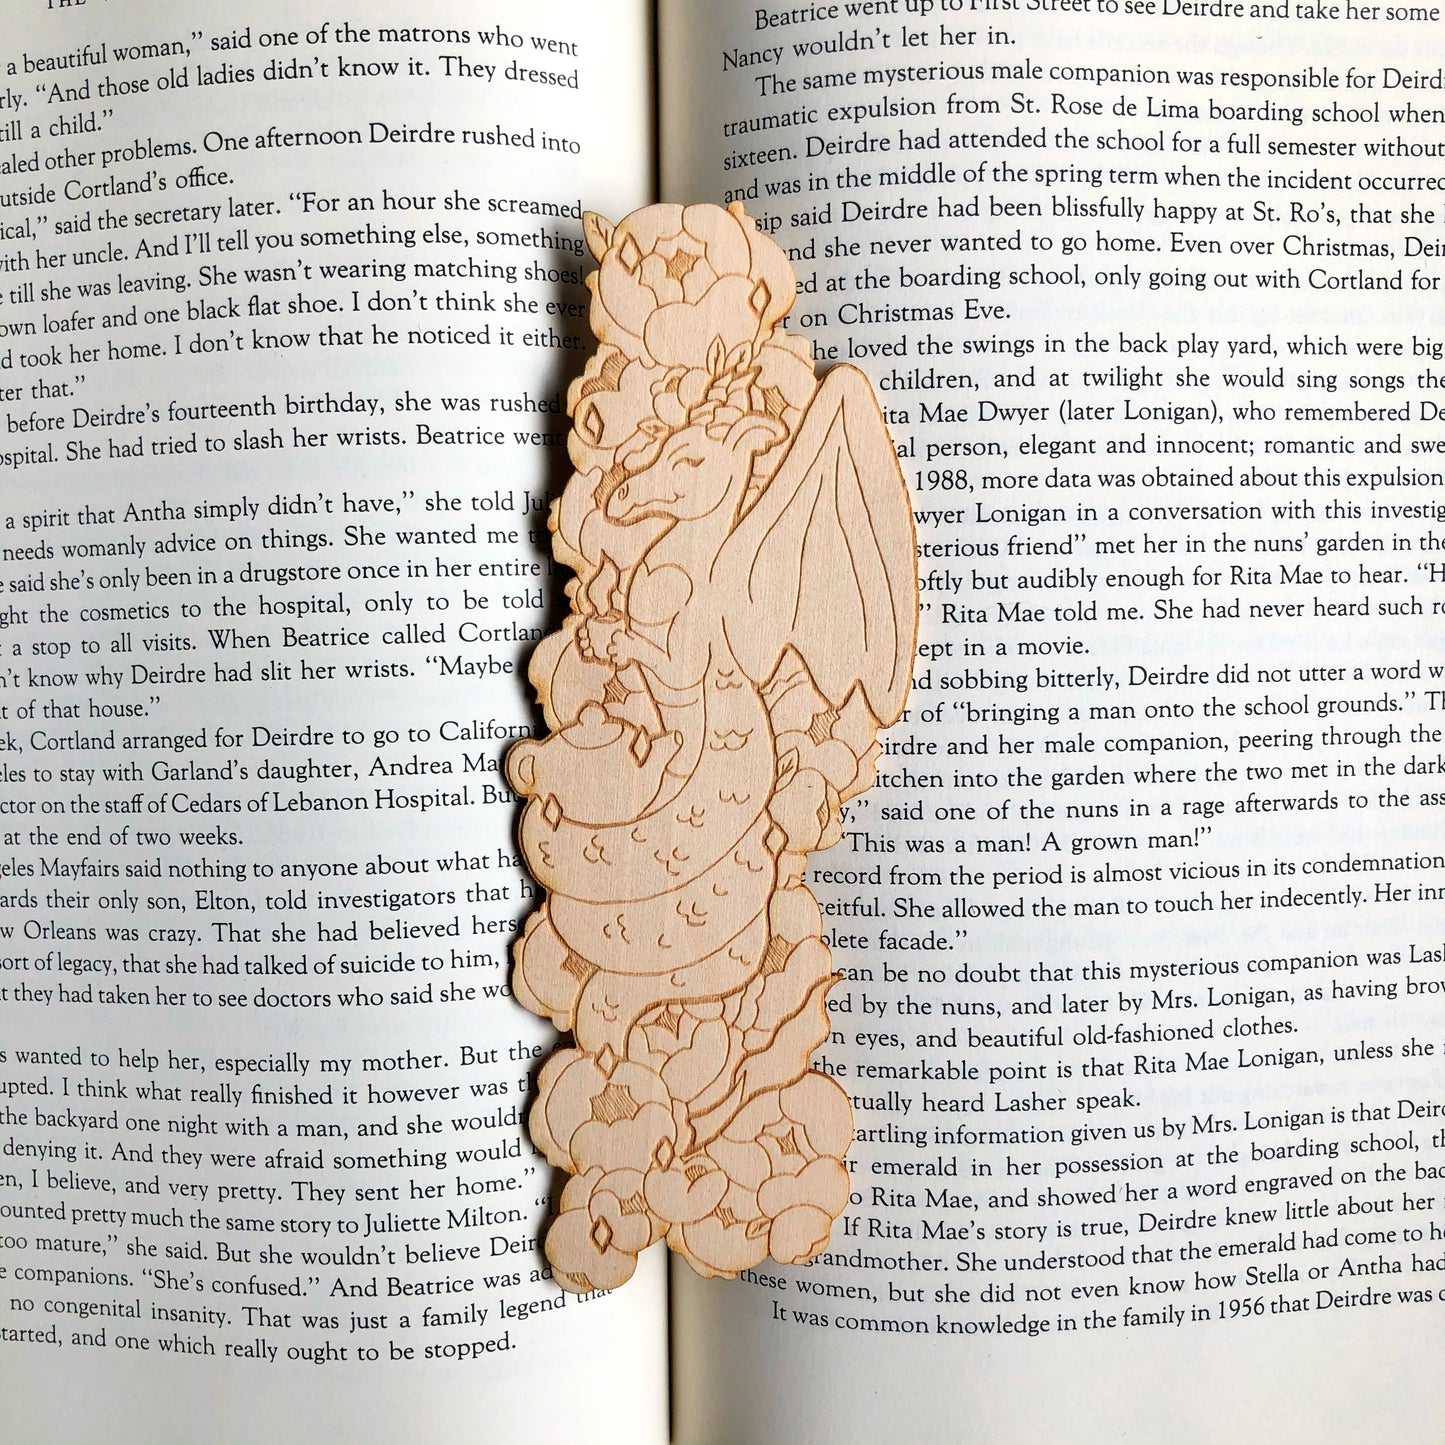 Tea Dragon Wooden Bookmark